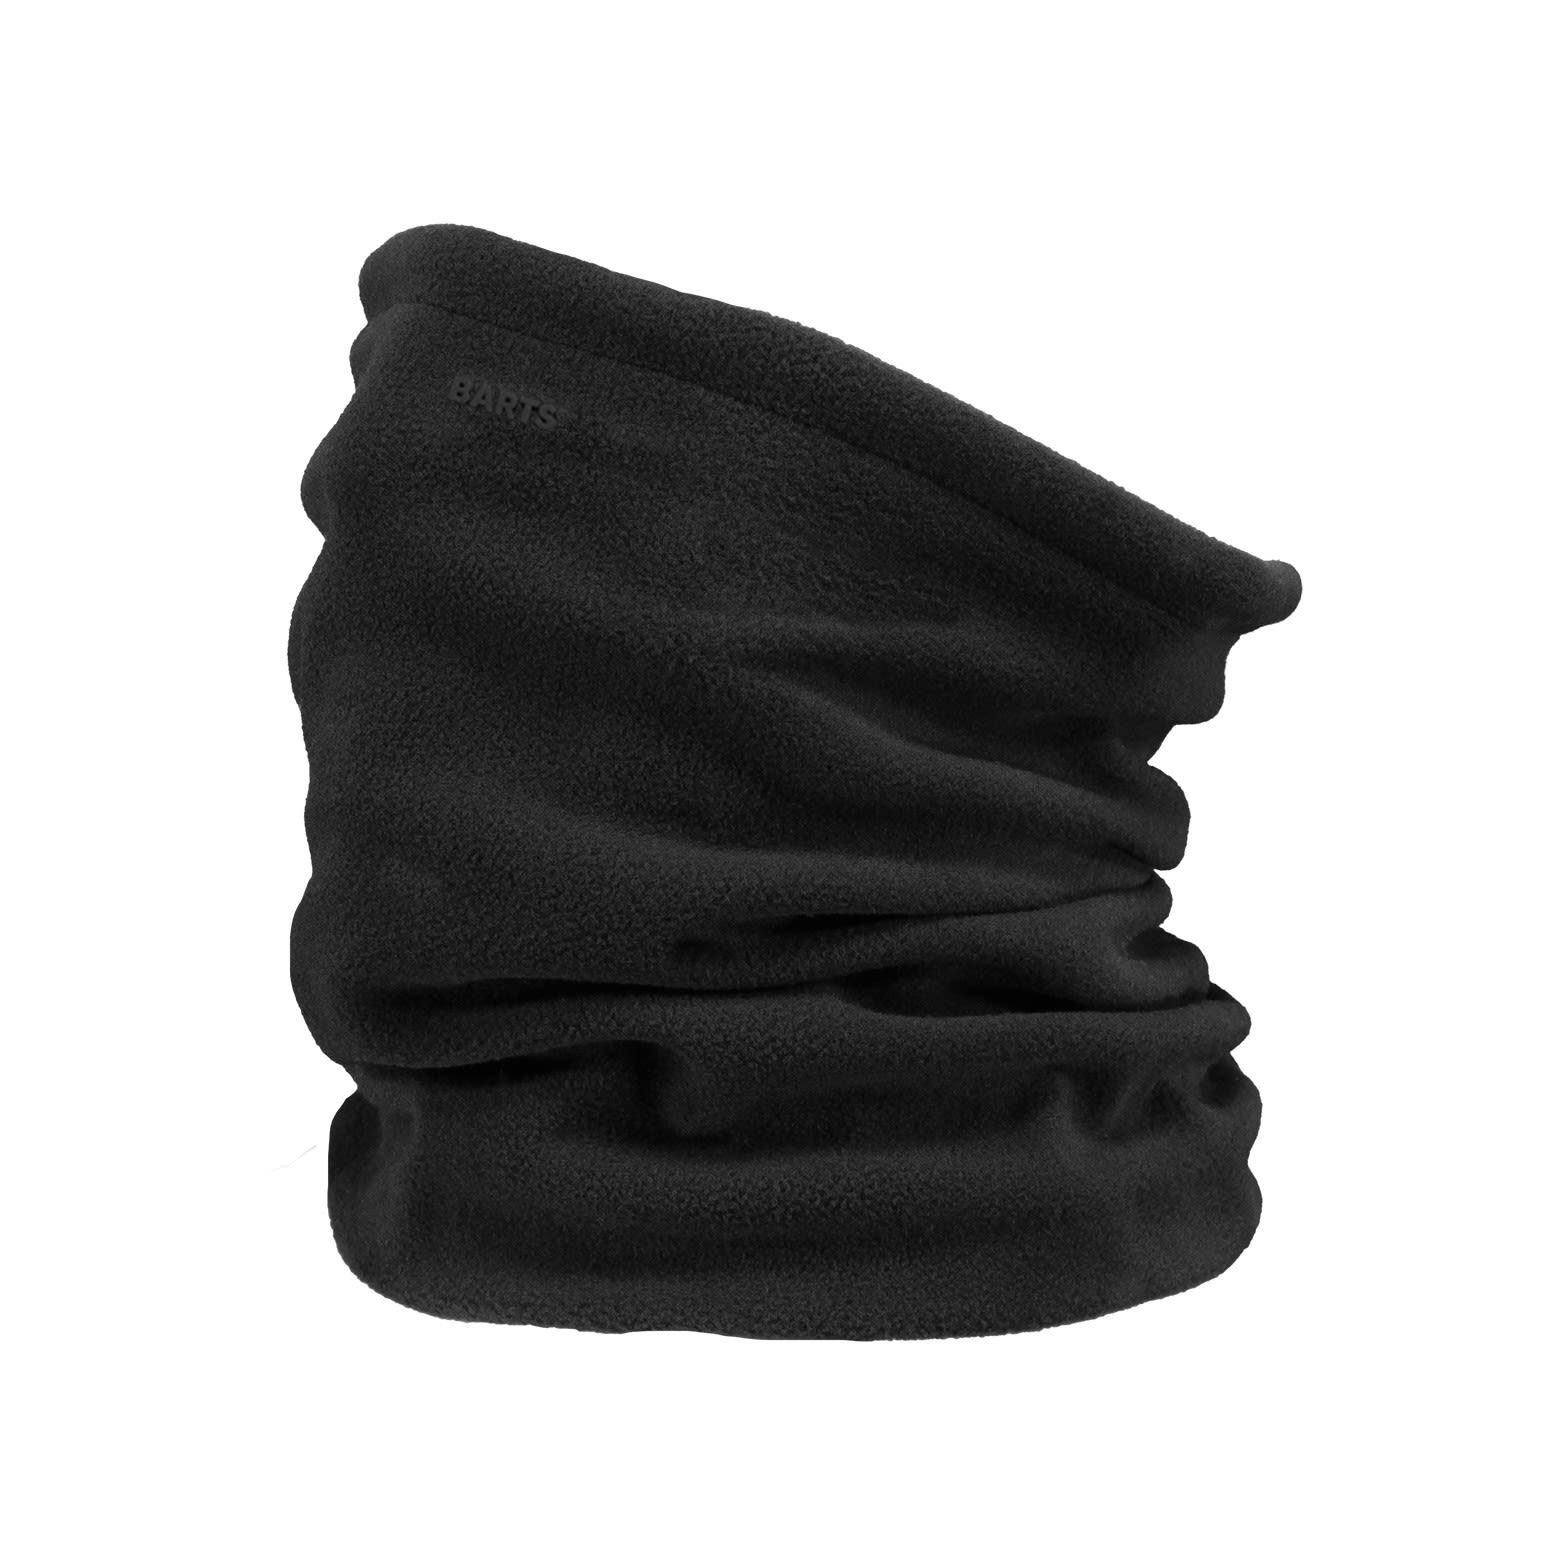 Barts Barts Fleece Col Schal Accessoires Black